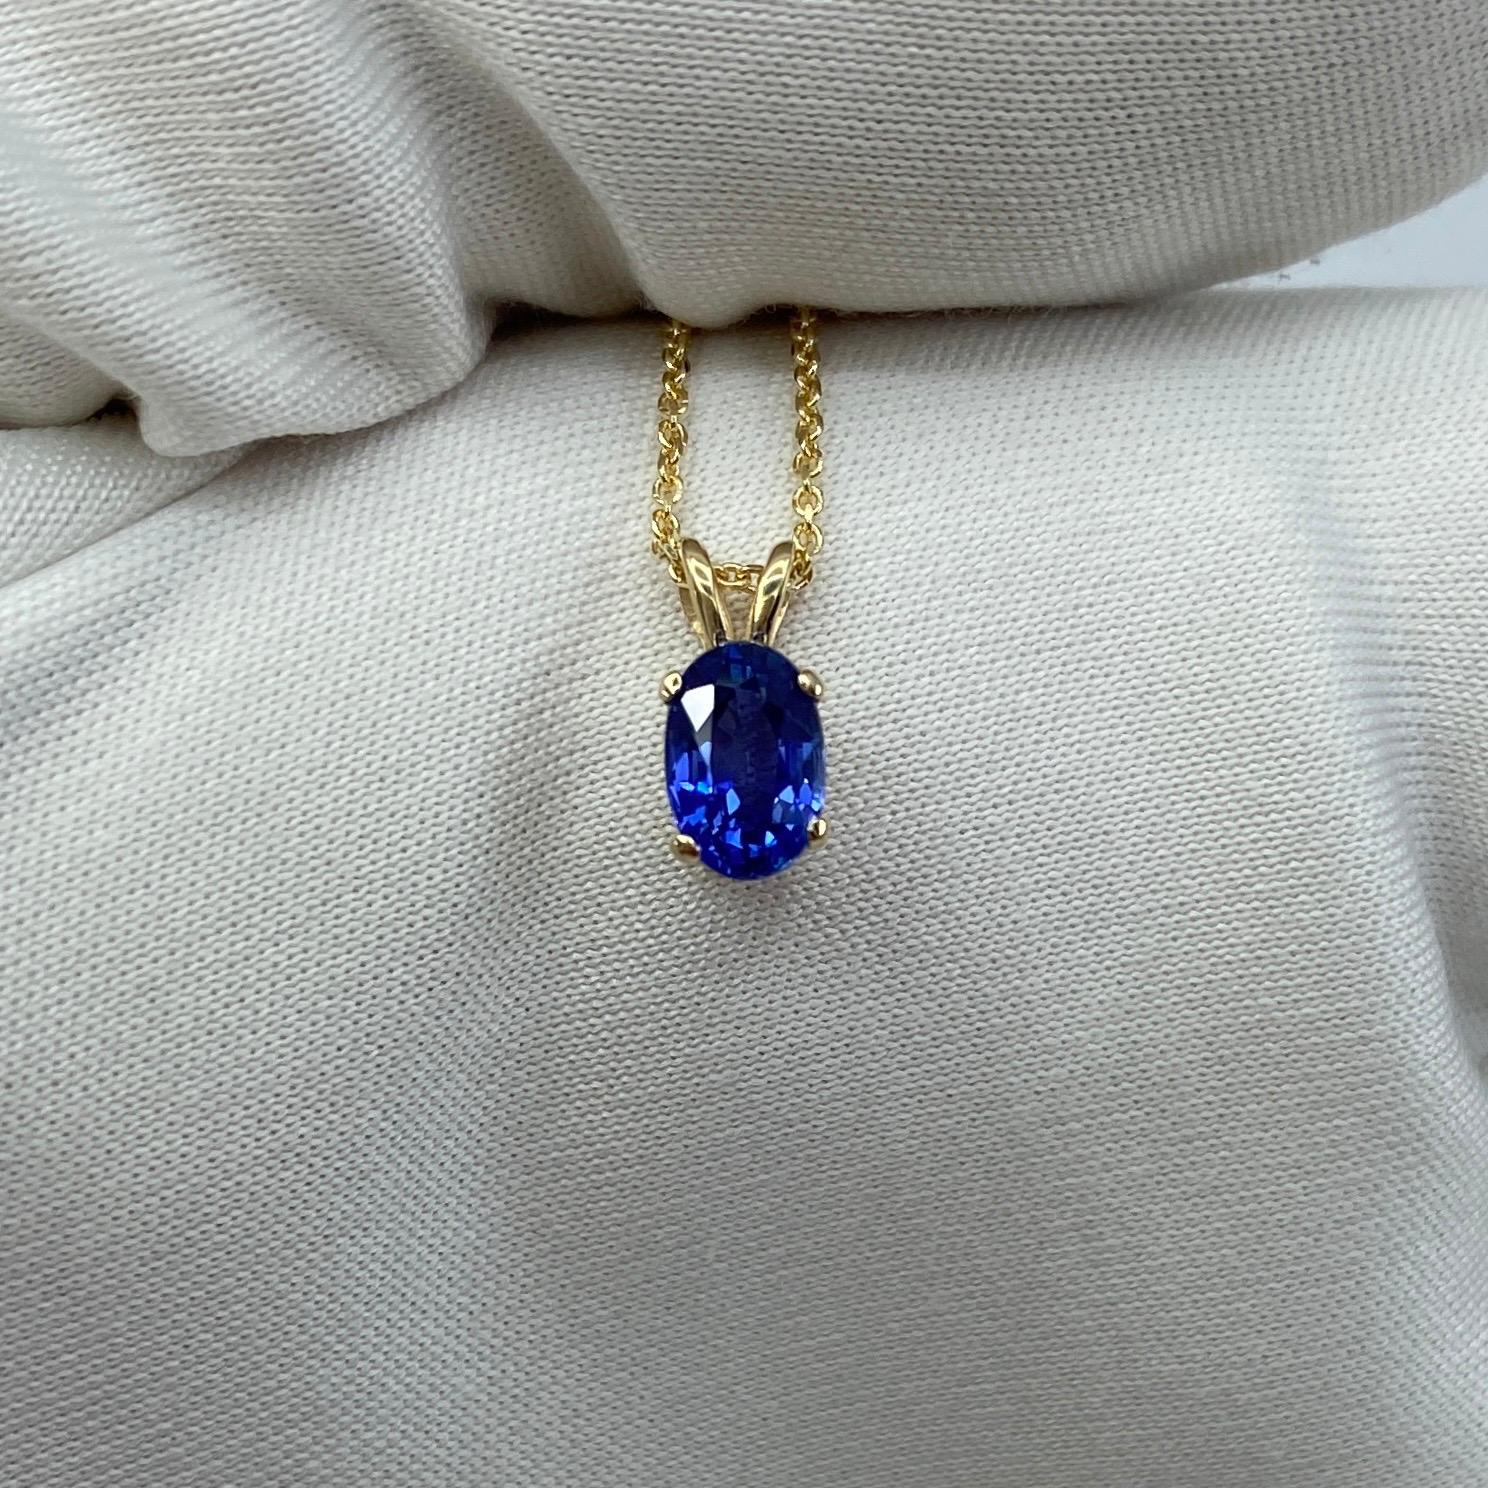 Fine Vivid Blue Oval Cut Sapphire Yellow Gold Solitaire Pendant Necklace 8